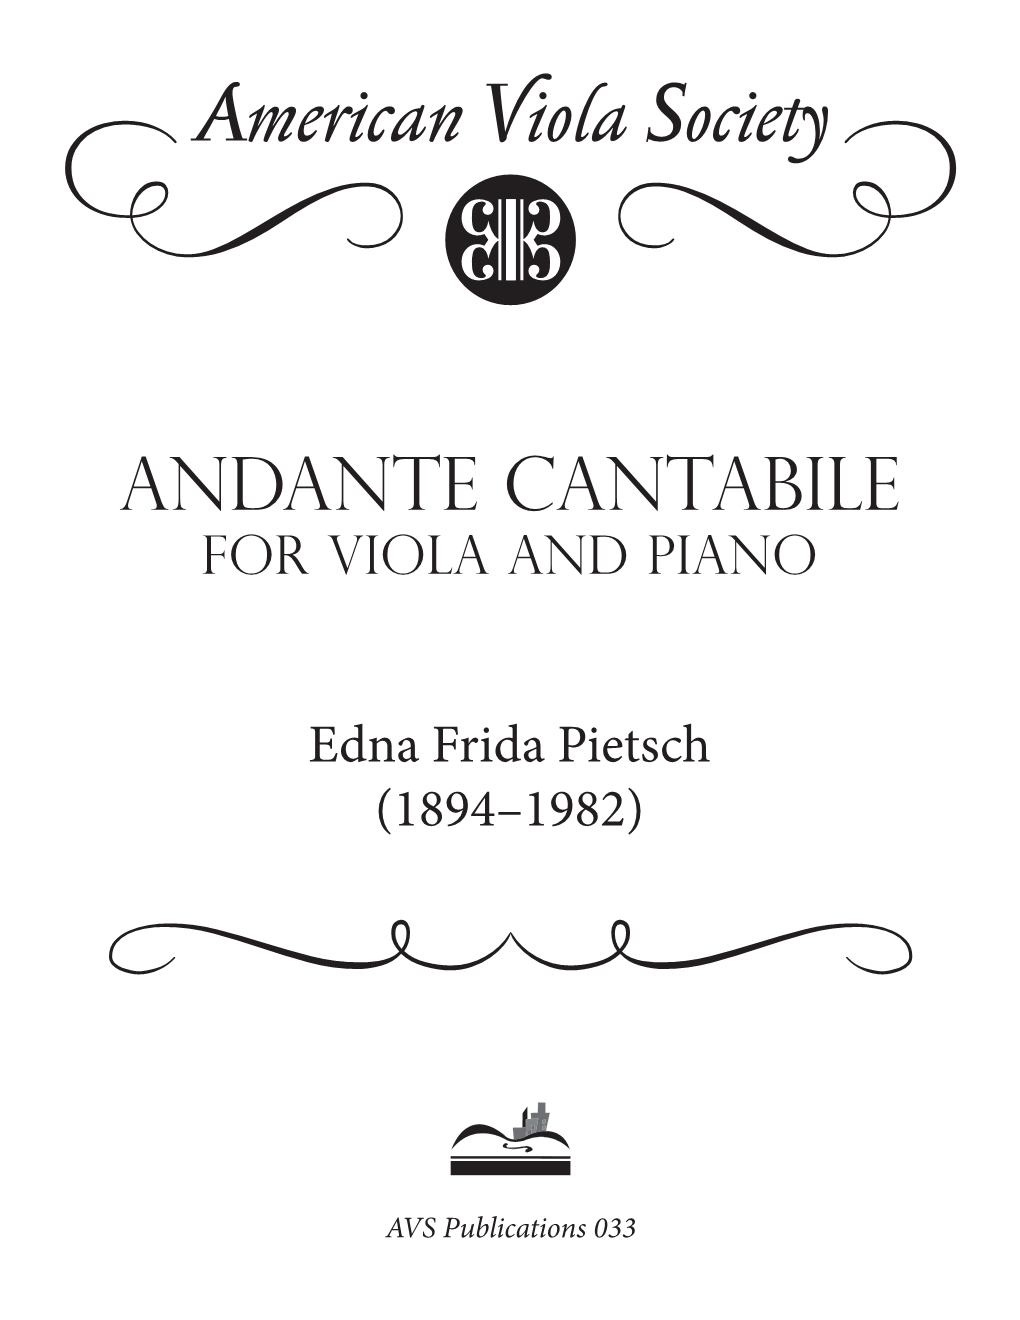 Andante Cantabile for Viola and Piano